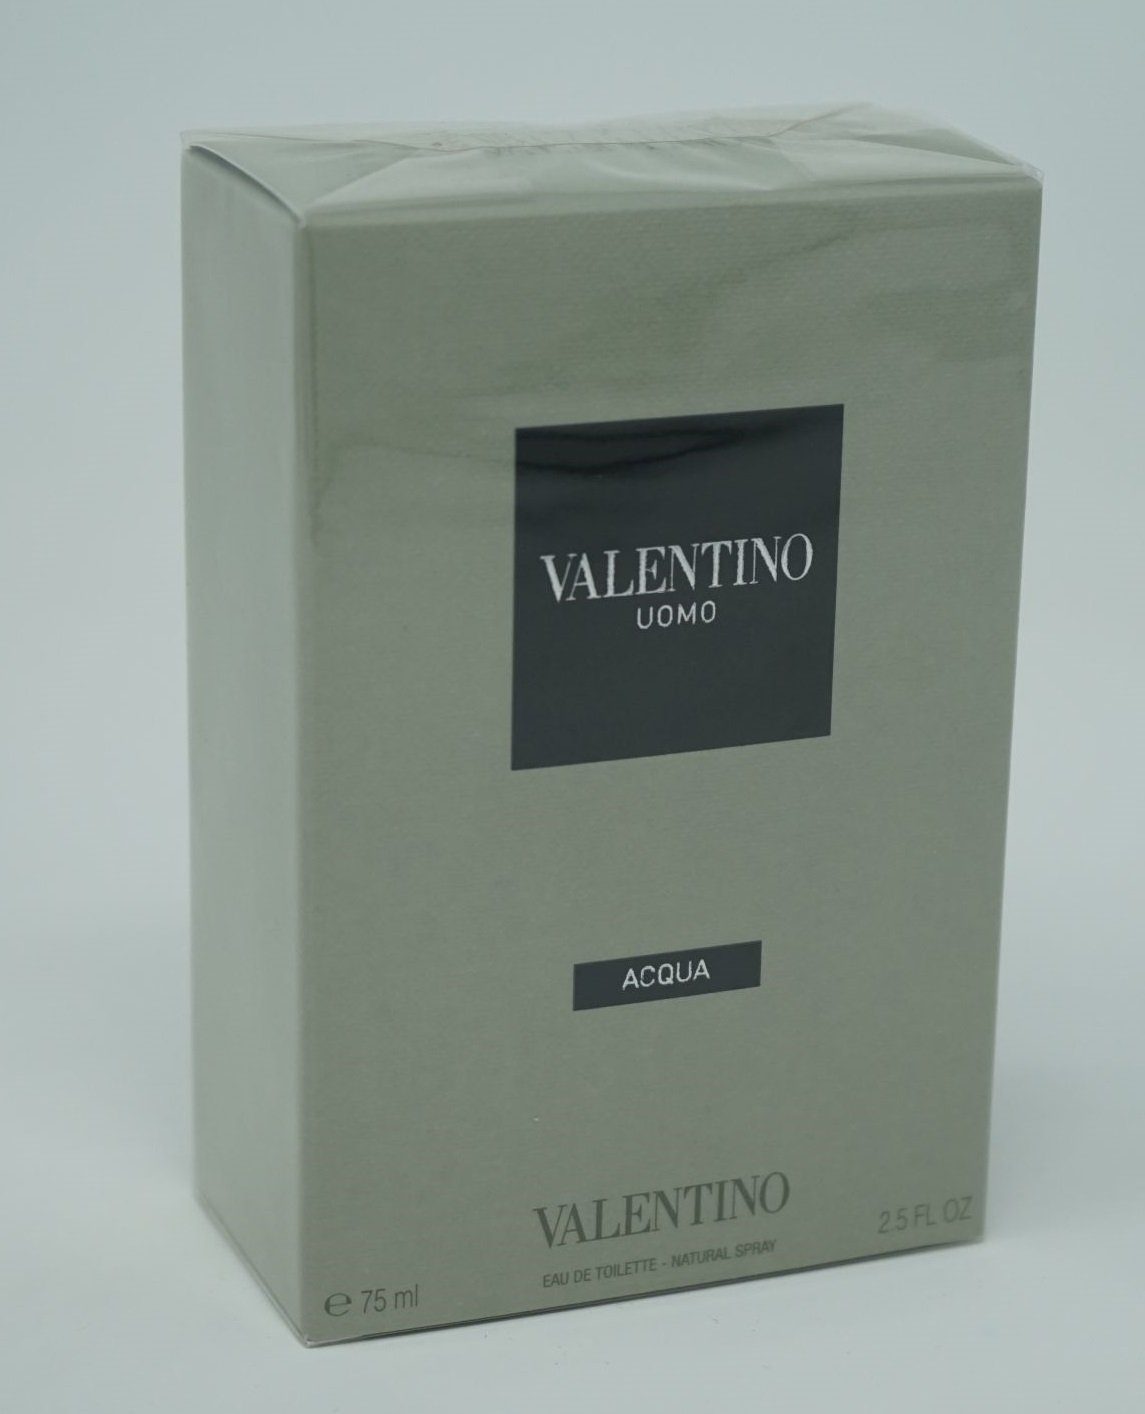 Toilette Toilette Spray de Uomo Valentino Eau de Valentino Acqua Eau 75ml